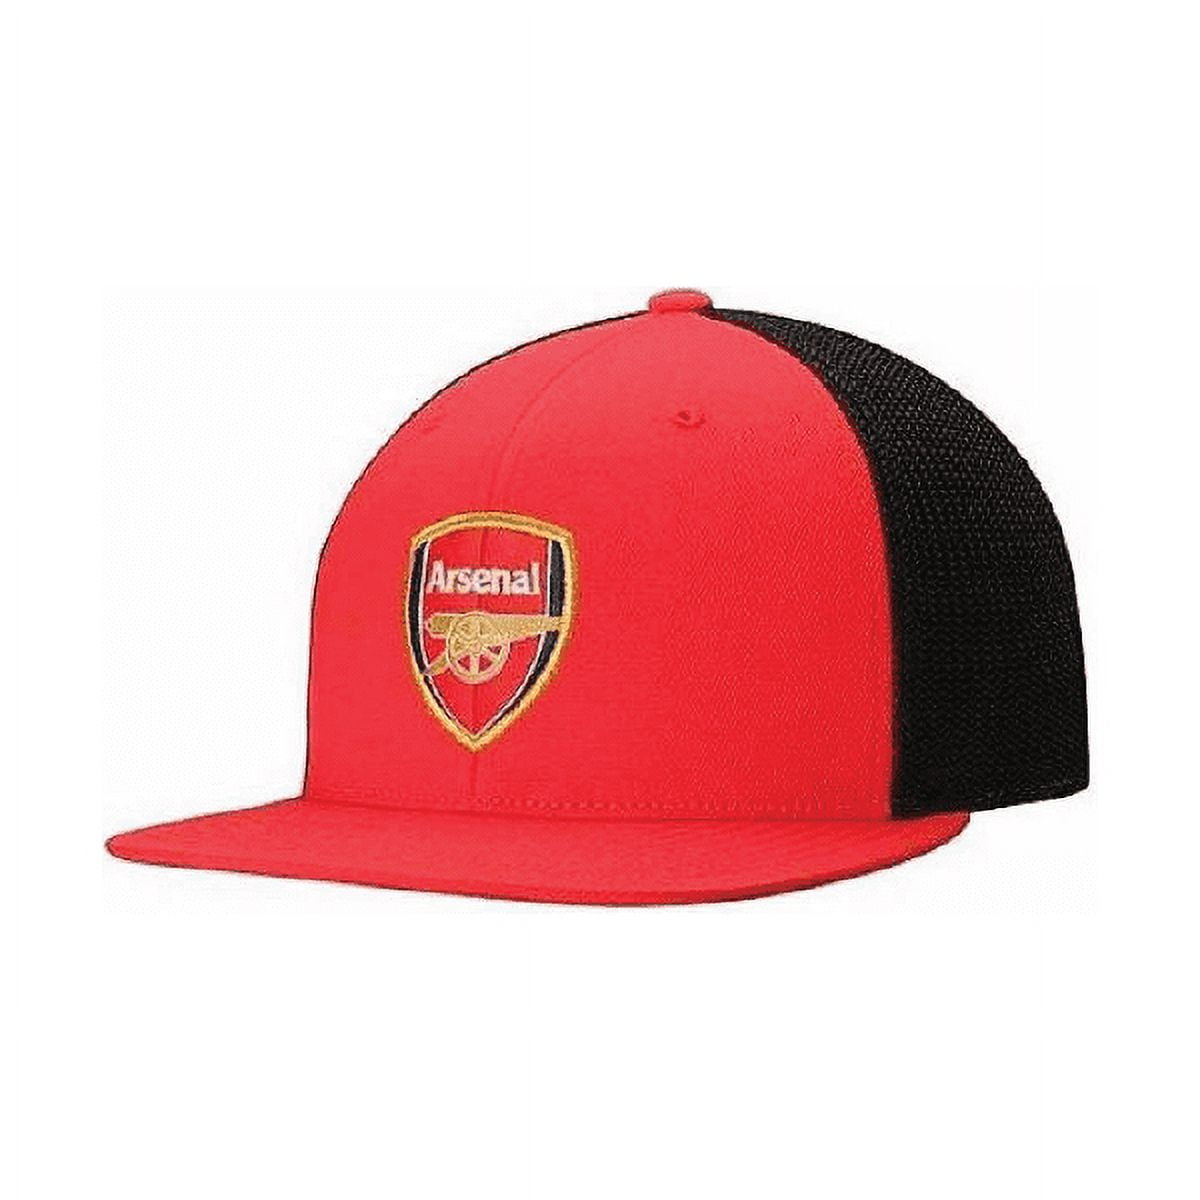 Arsenal FC Puma 110 Snapback Red/Black Hat - OSFA Flex 